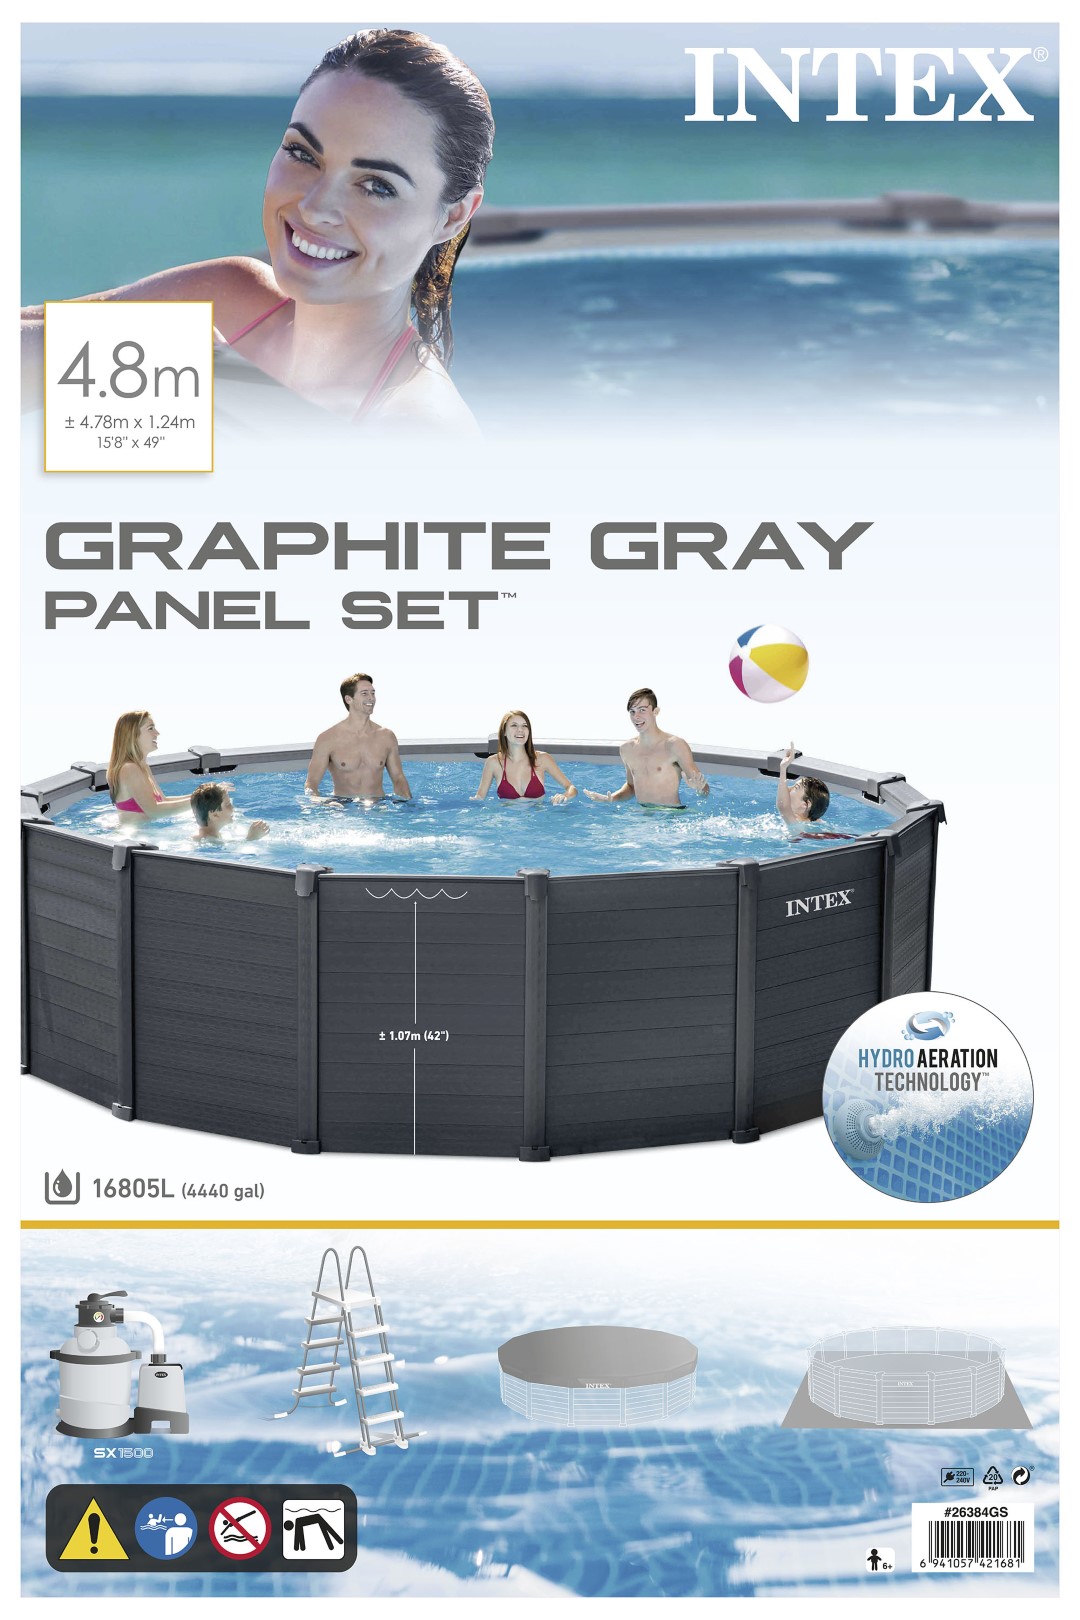 https://www.warentuin.nl/media/catalog/product/S/C/SCAN6941057421681_Zwembad_4_78m_x_1_24m_graphite_gray_panel_pool_set_Intex_3c0e.jpg